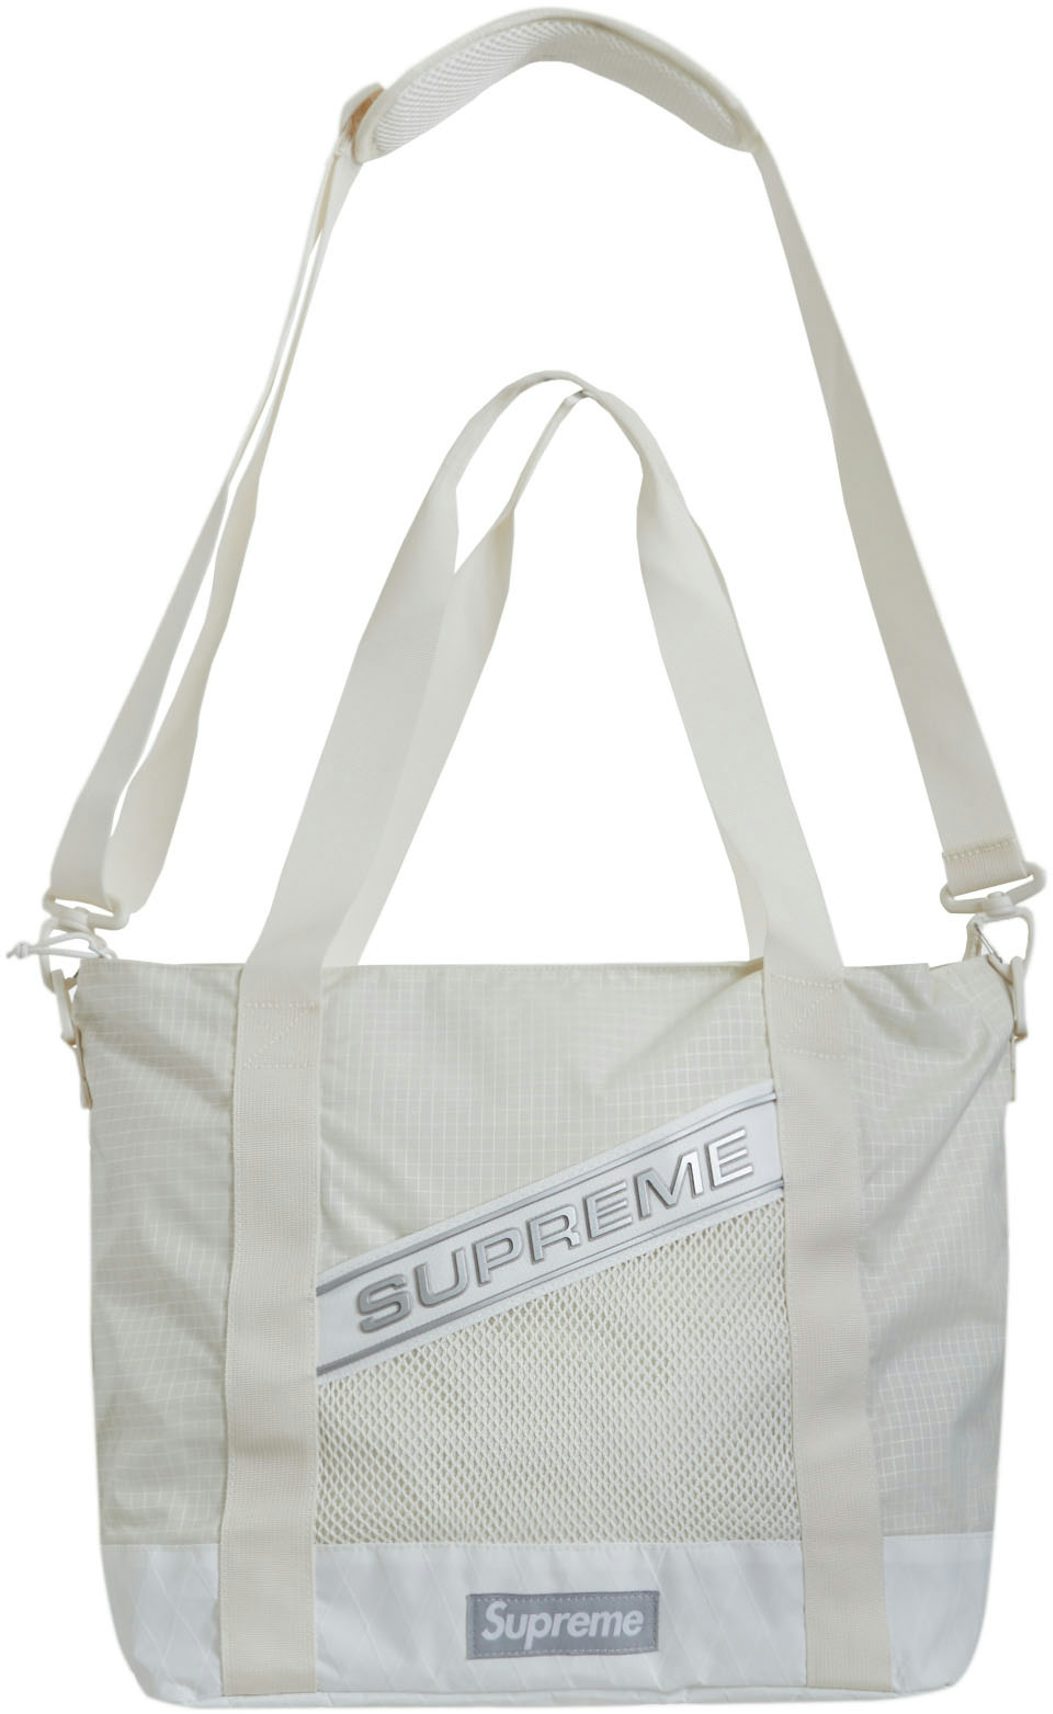 supreme tote bag